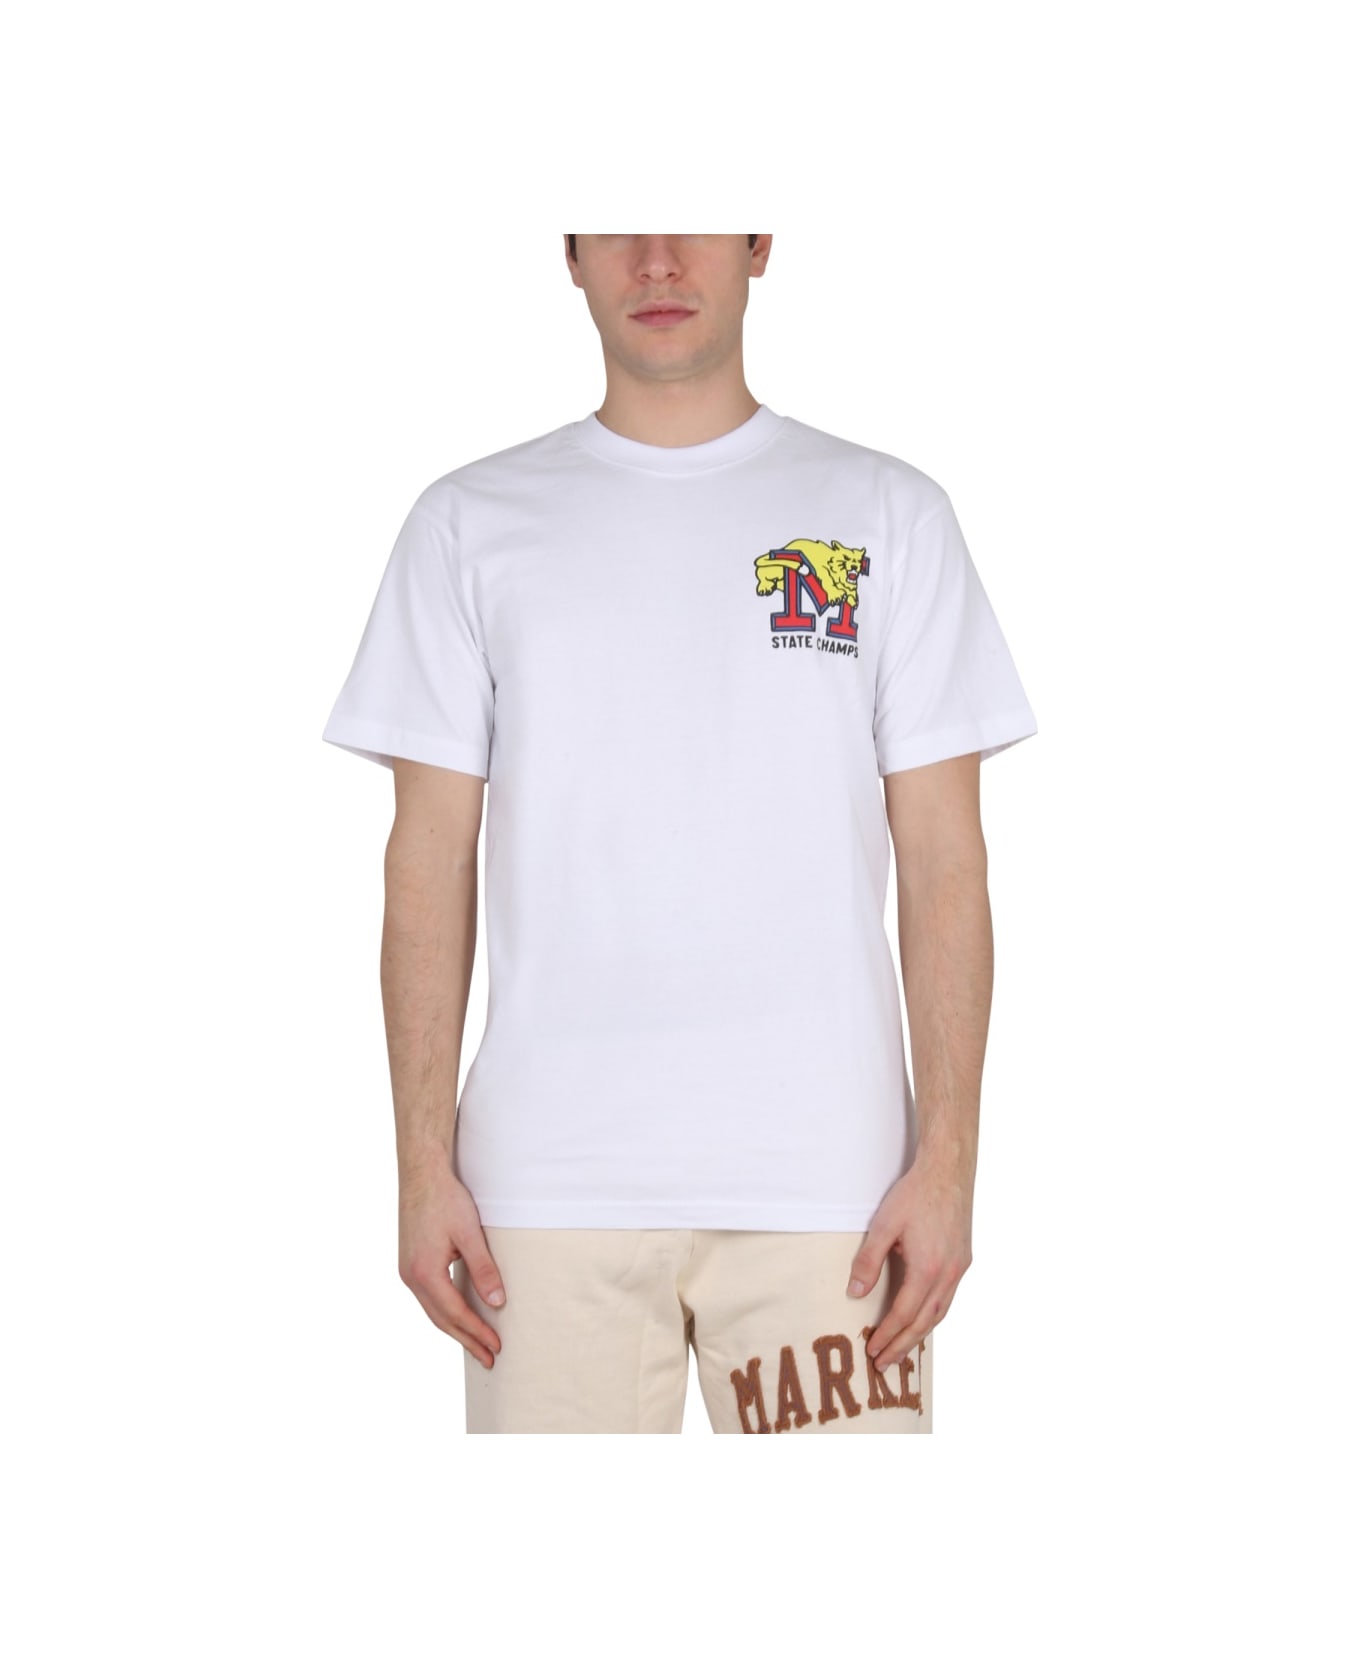 Market T-shirt State Champs - WHITE